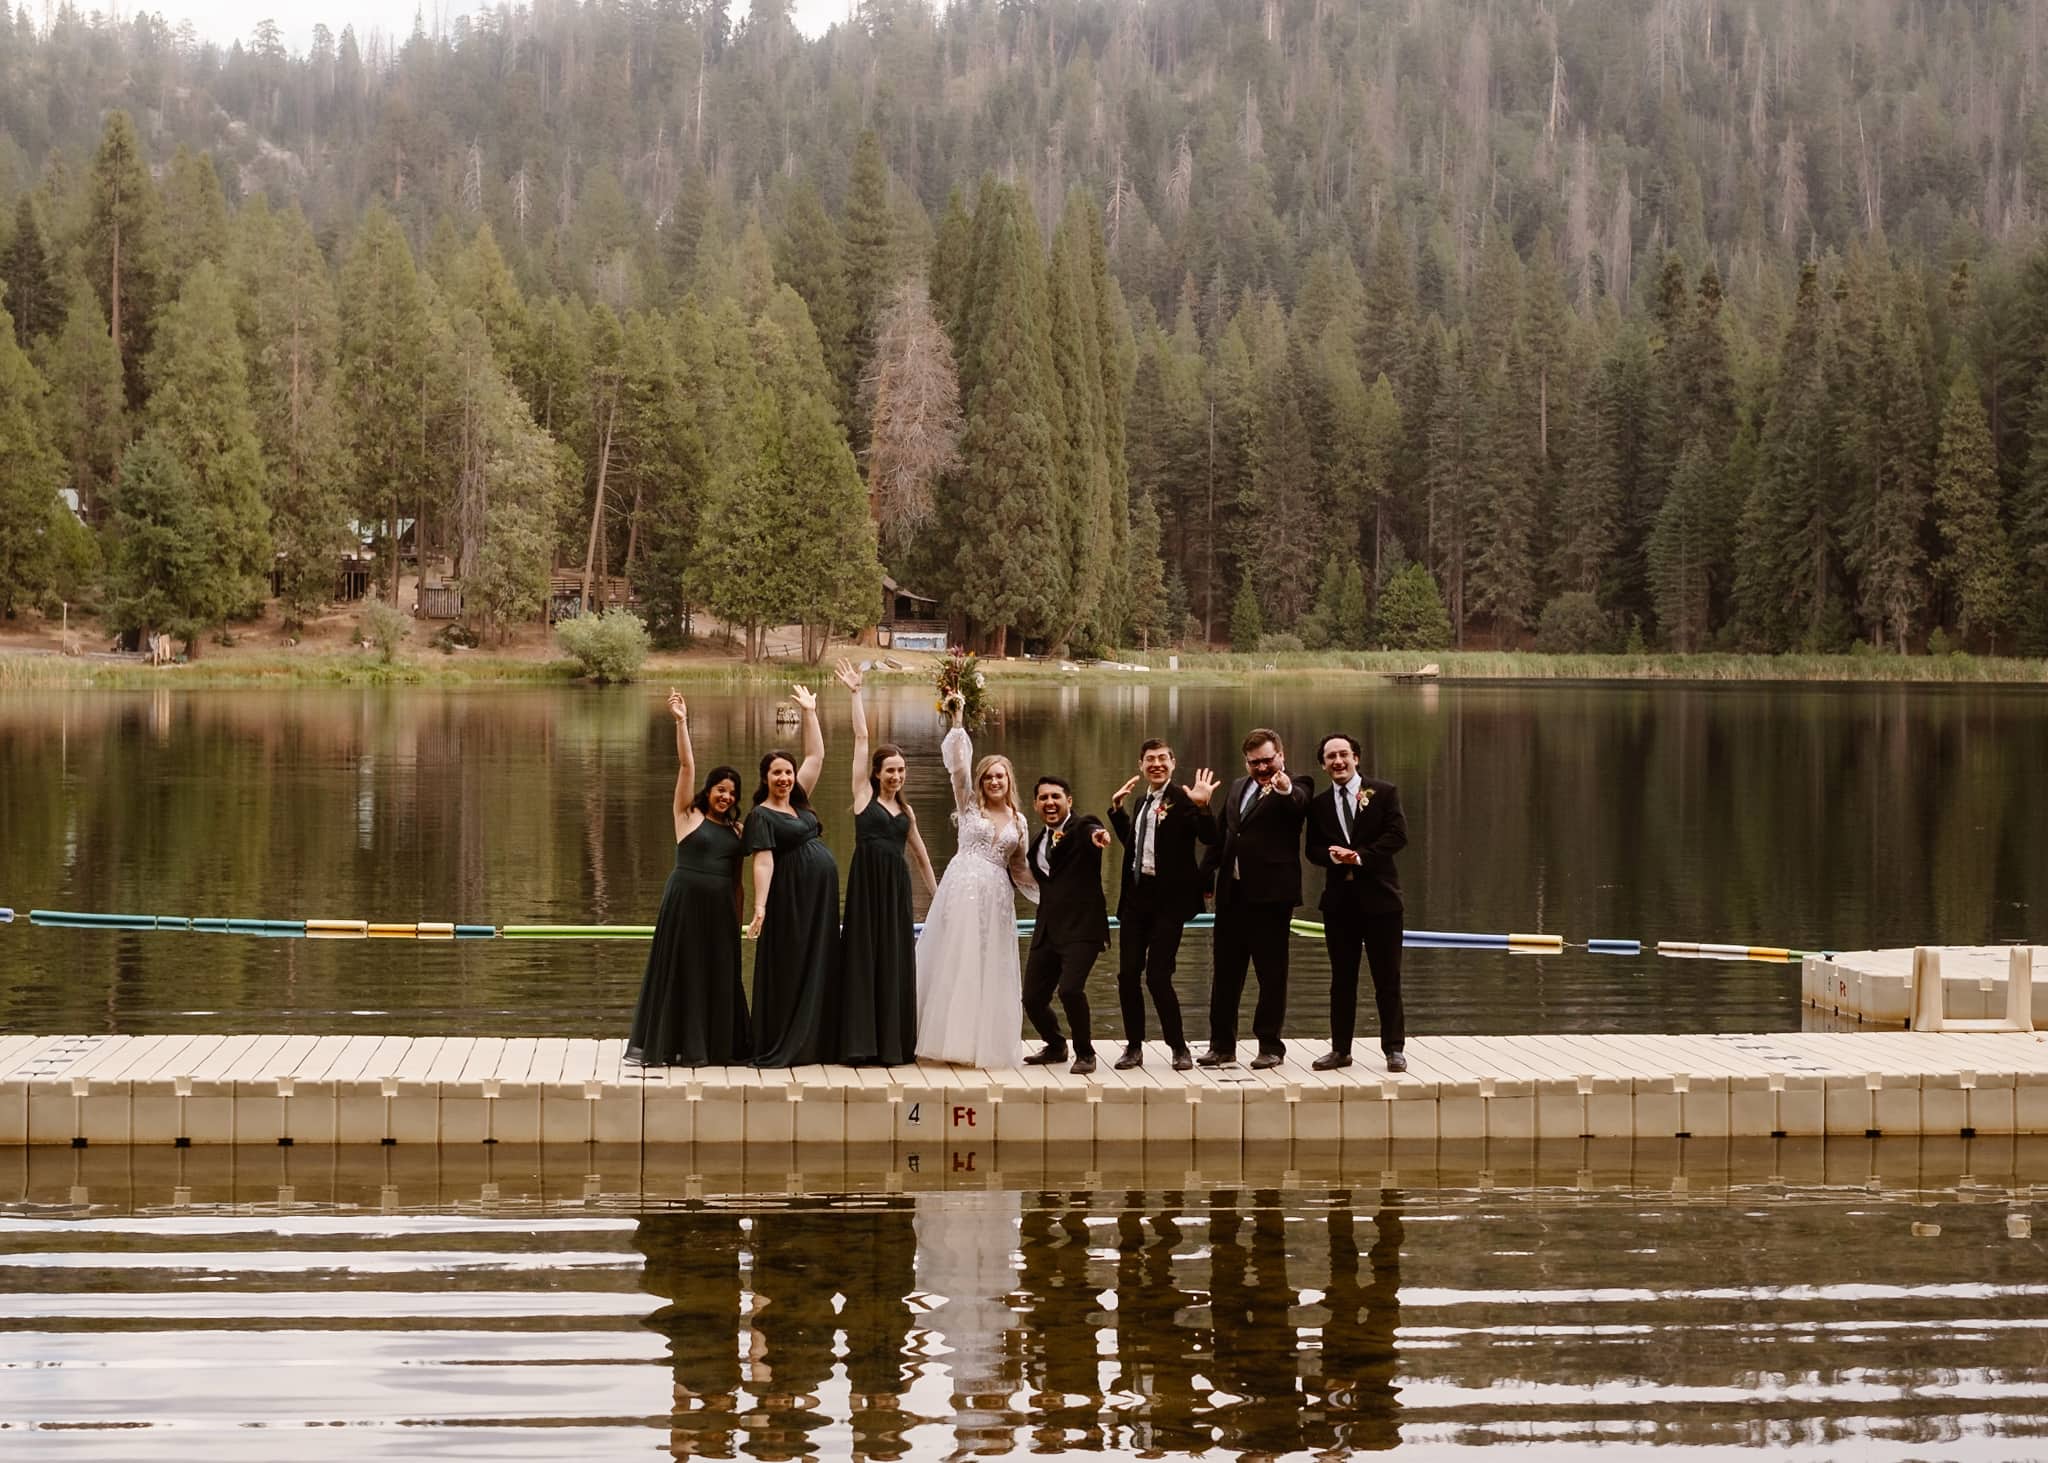 Wedding guests celebrating on lake dock.